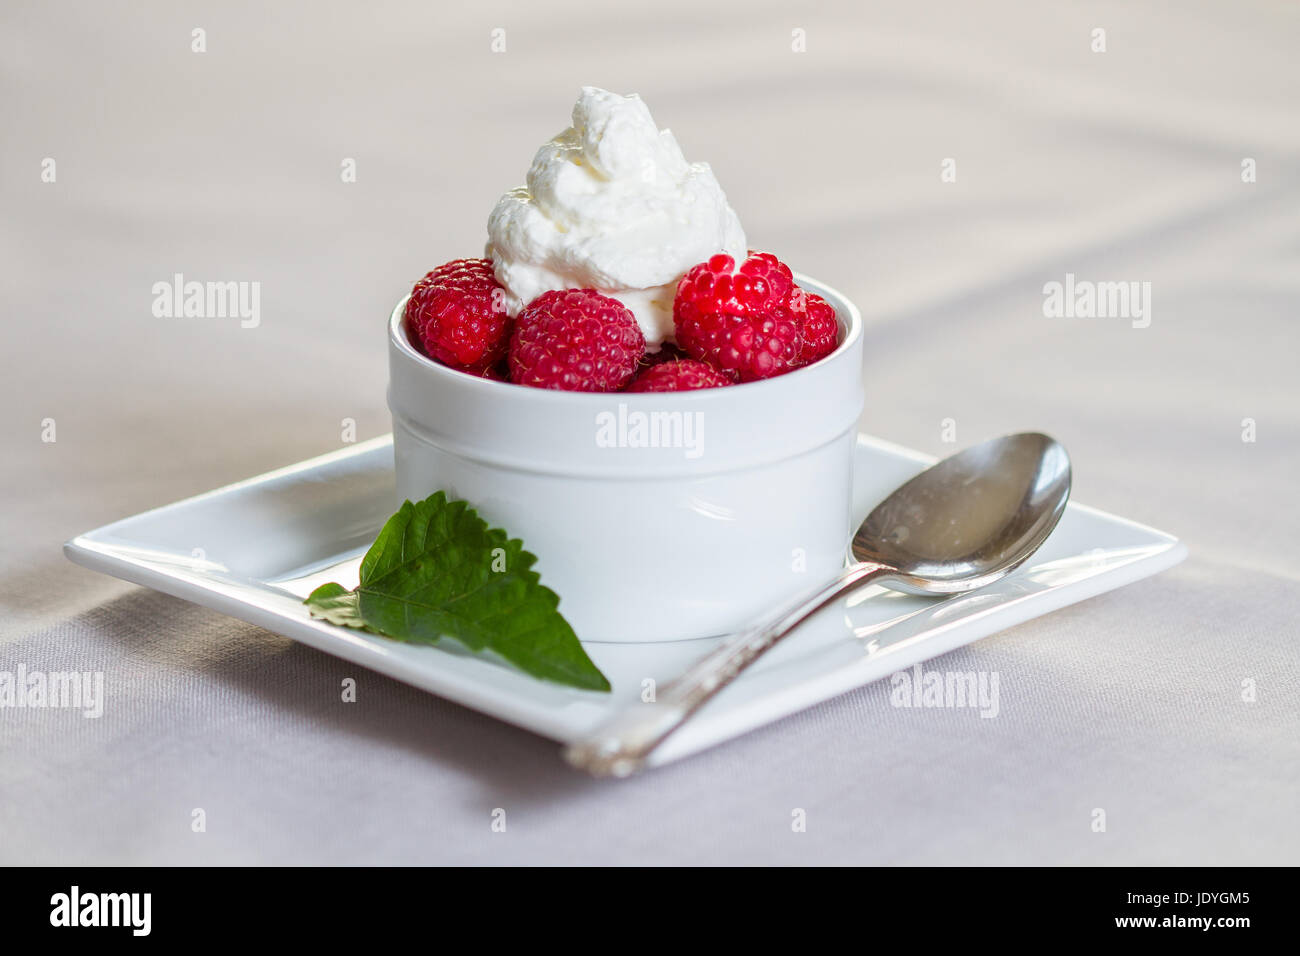 A dessert of Fresh Raspberries and whipped cream in restaurant setting. Stock Photo